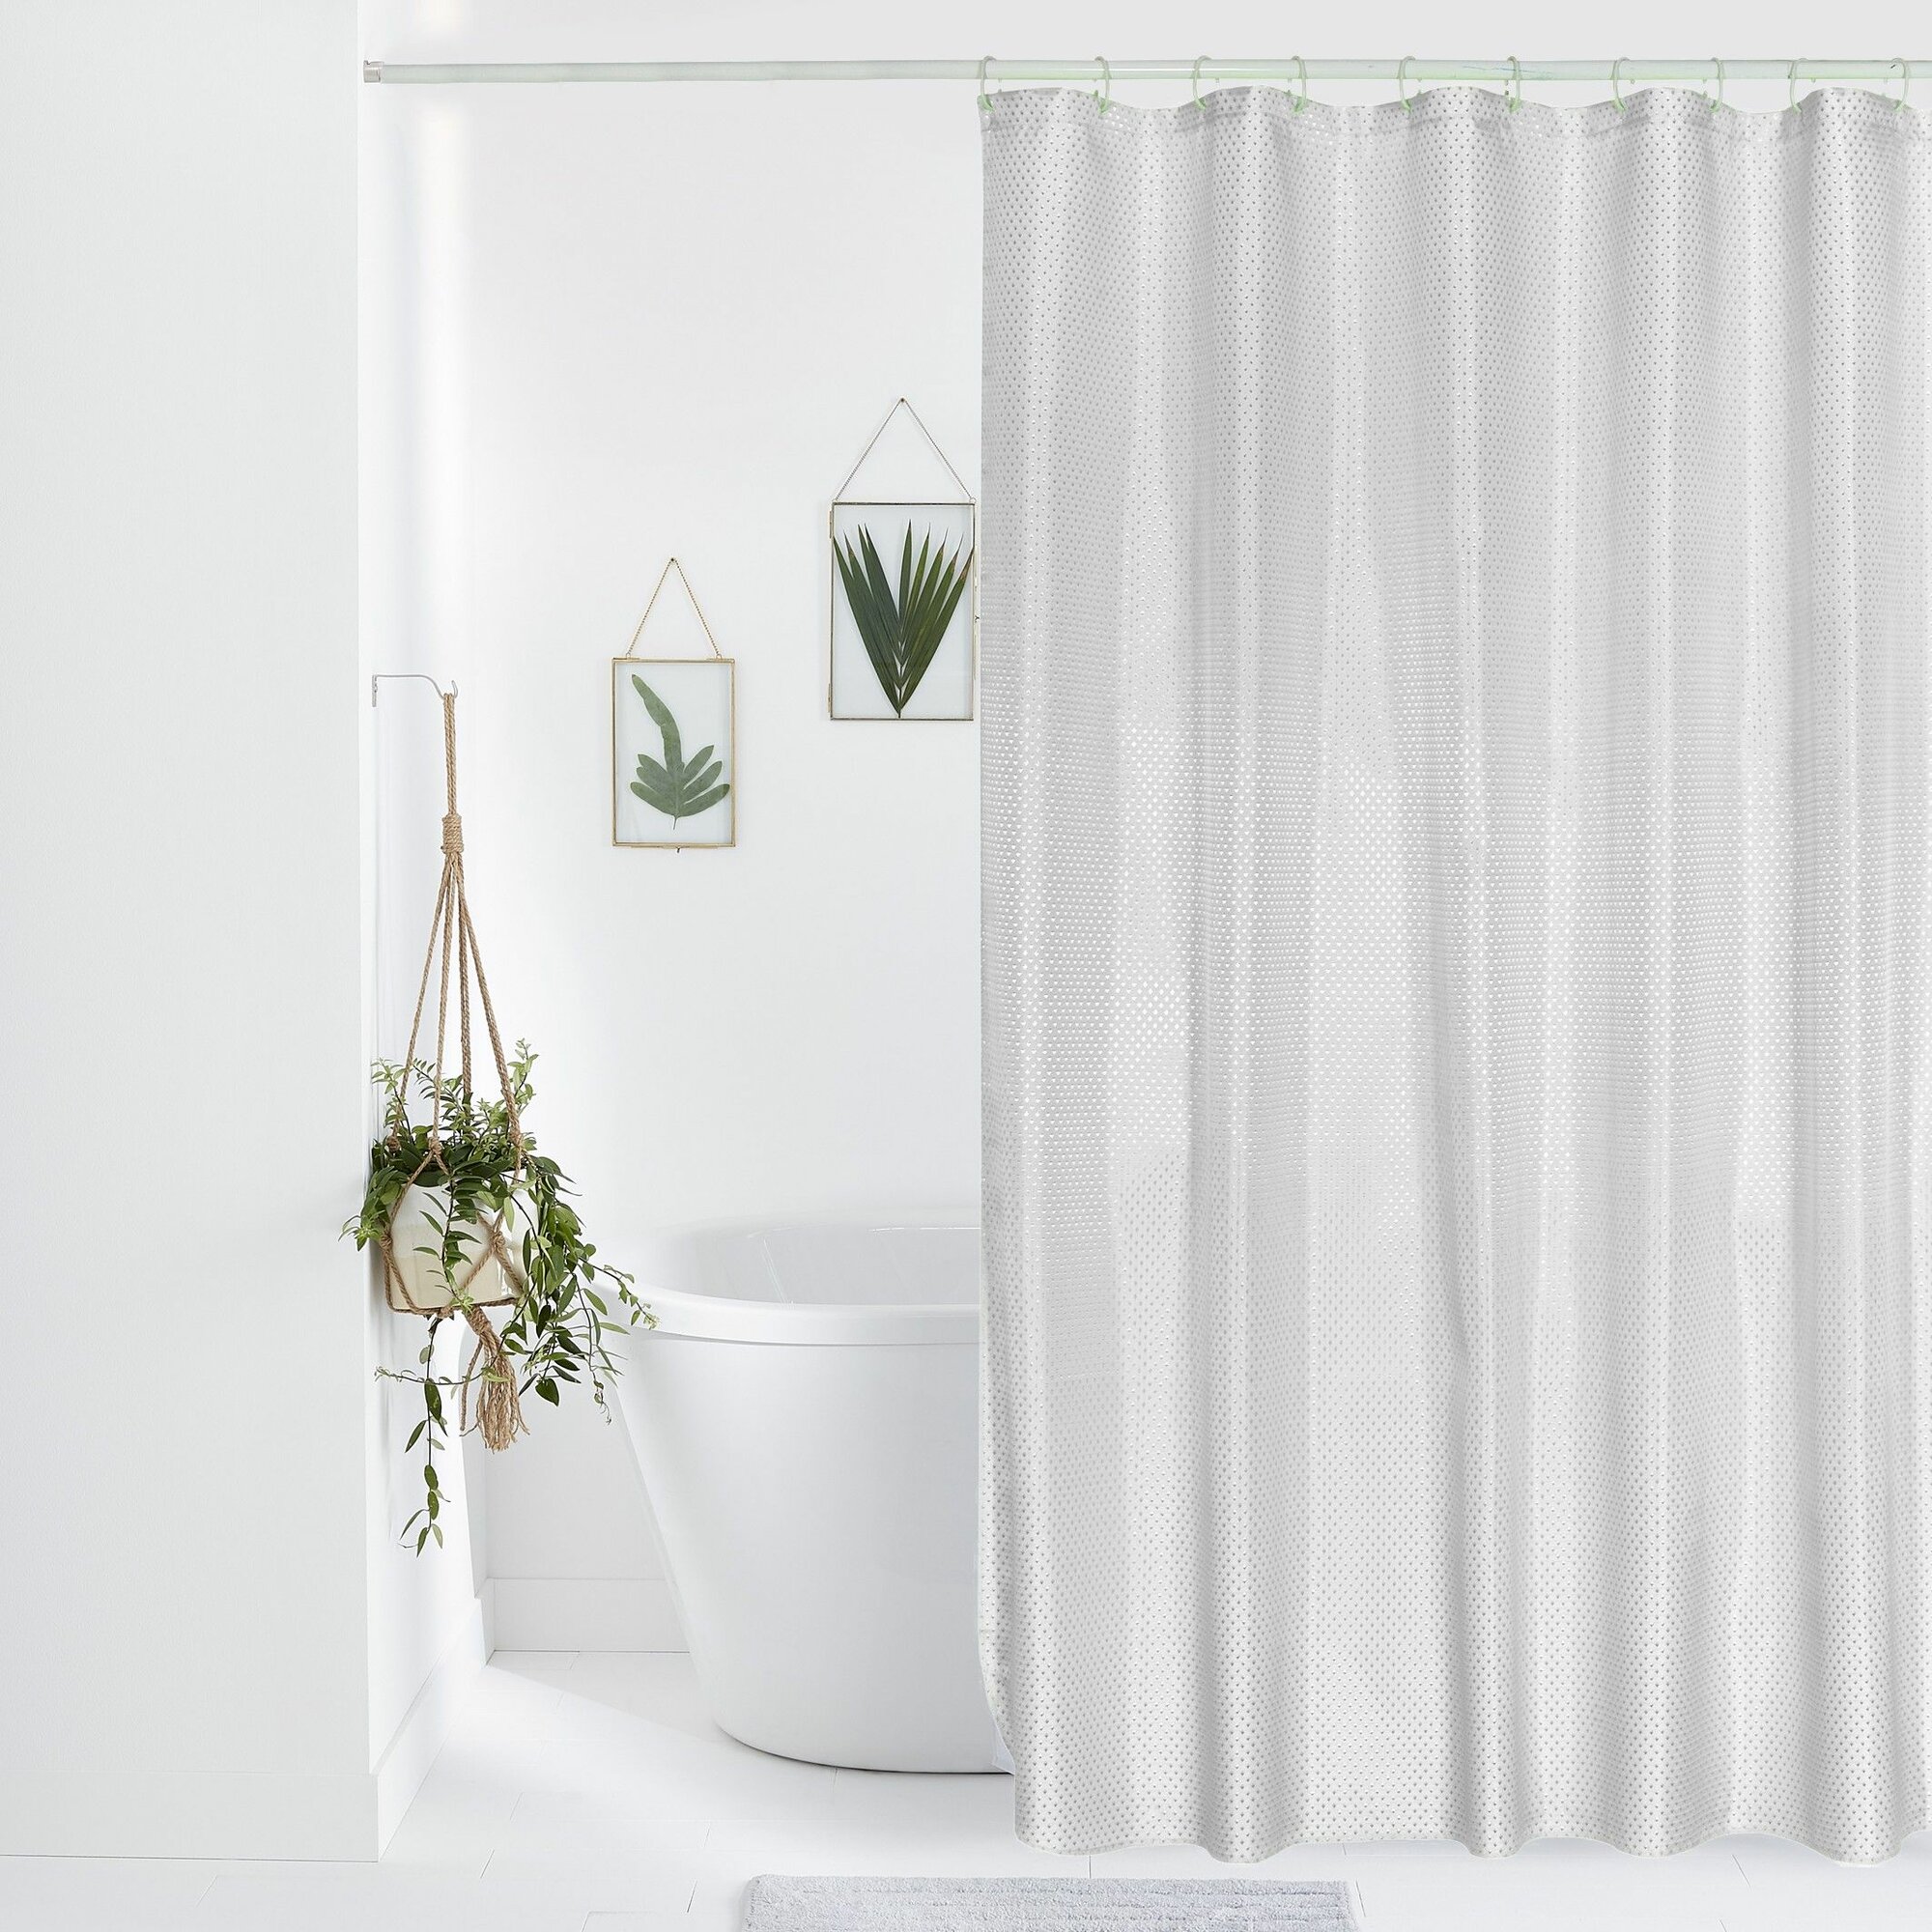 Штора для ванной комнаты тканевая 180х180 см шторка для душа белая бриллиант водонепроницаемая с кольцами